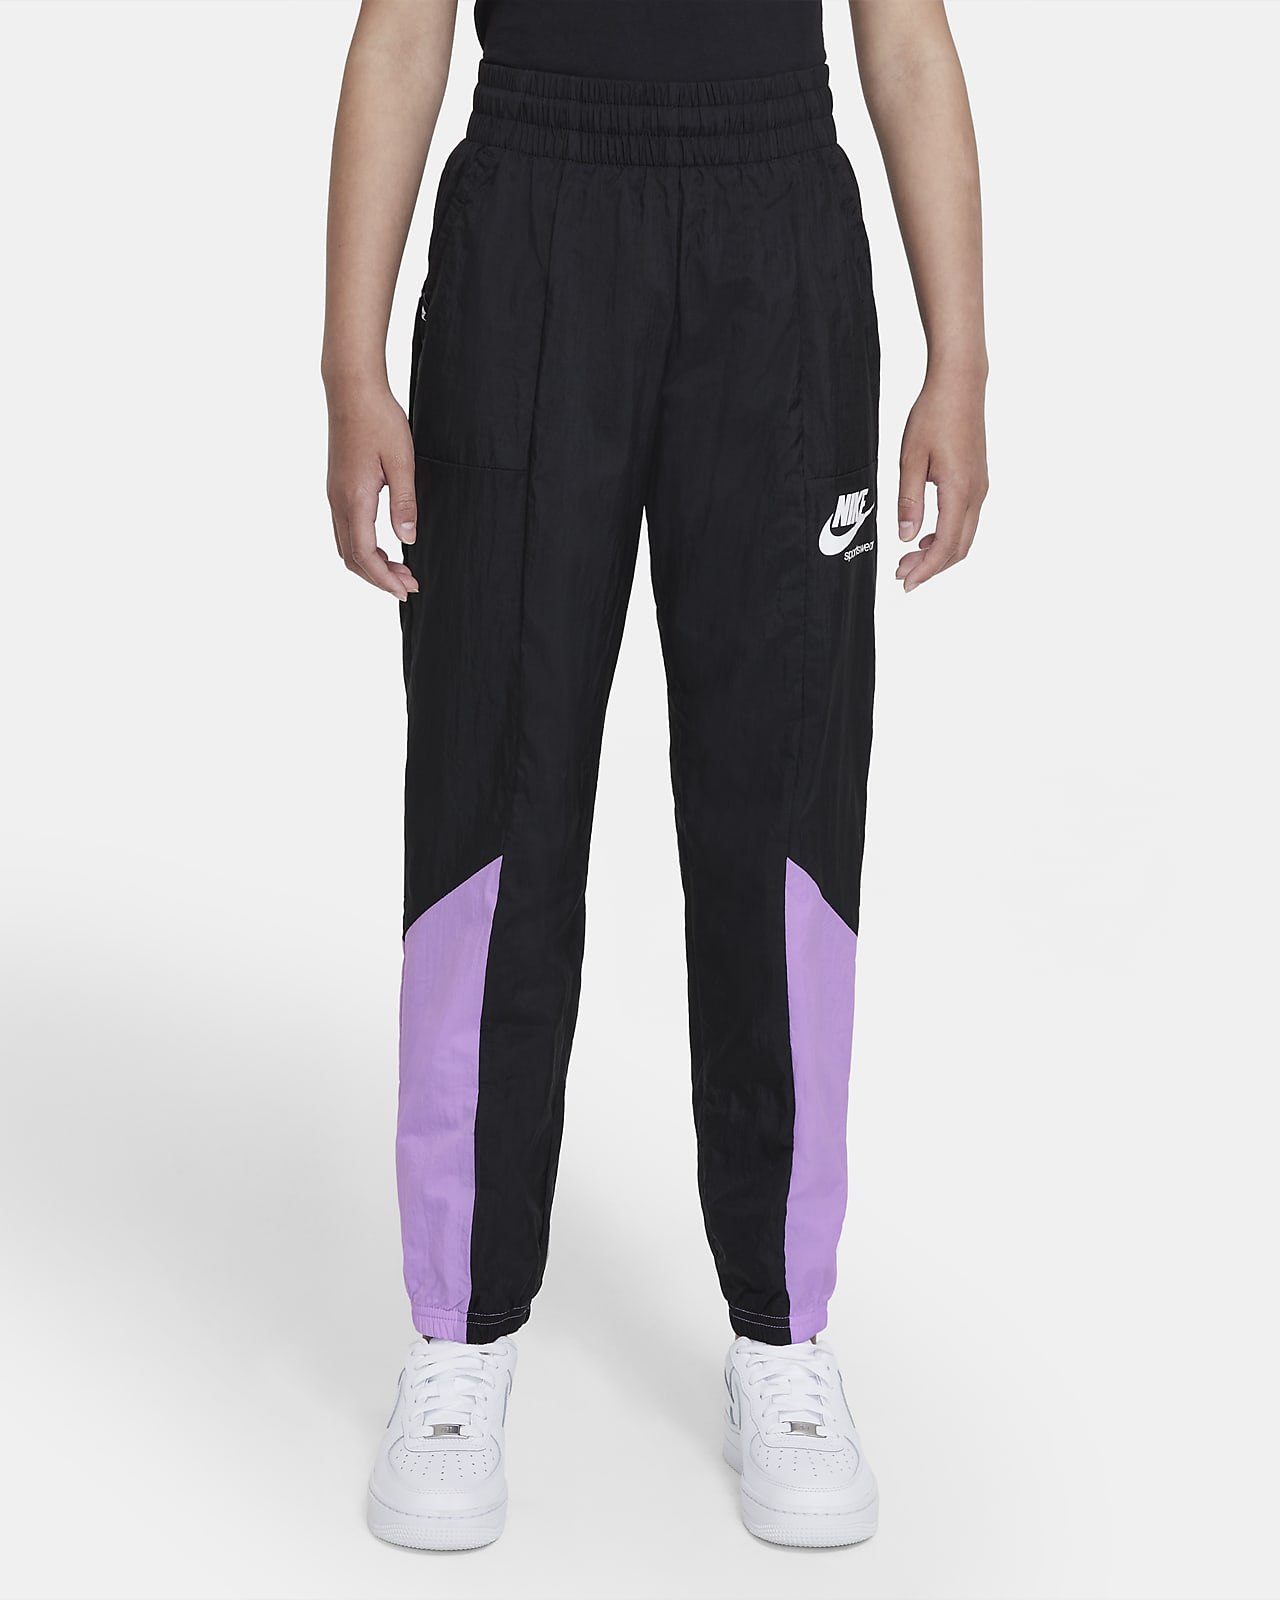 Girls' trousers Nike Court Club Pants - honeydew/white | Tennis Zone |  Tennis Shop